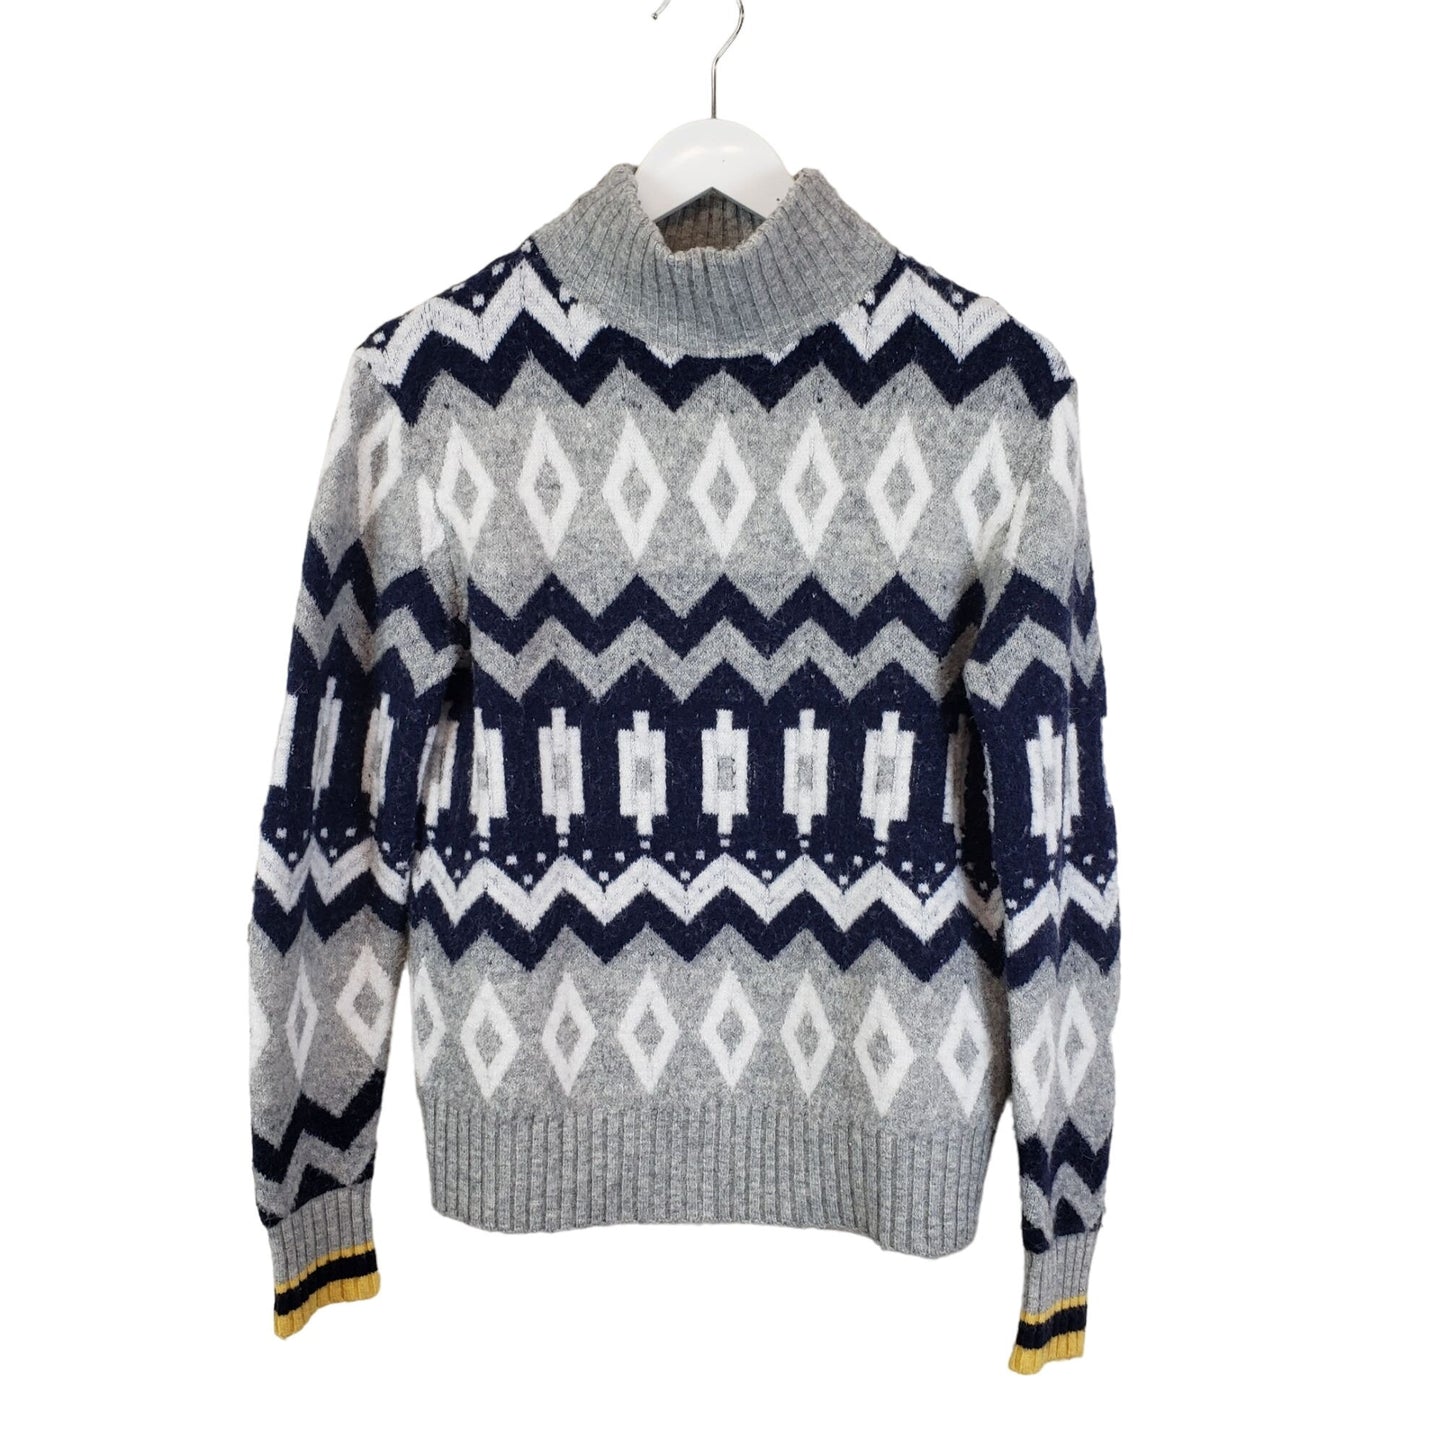 J. Crew Wool & Alpaca Graphic Pattern Crewneck Sweater Size XS/S